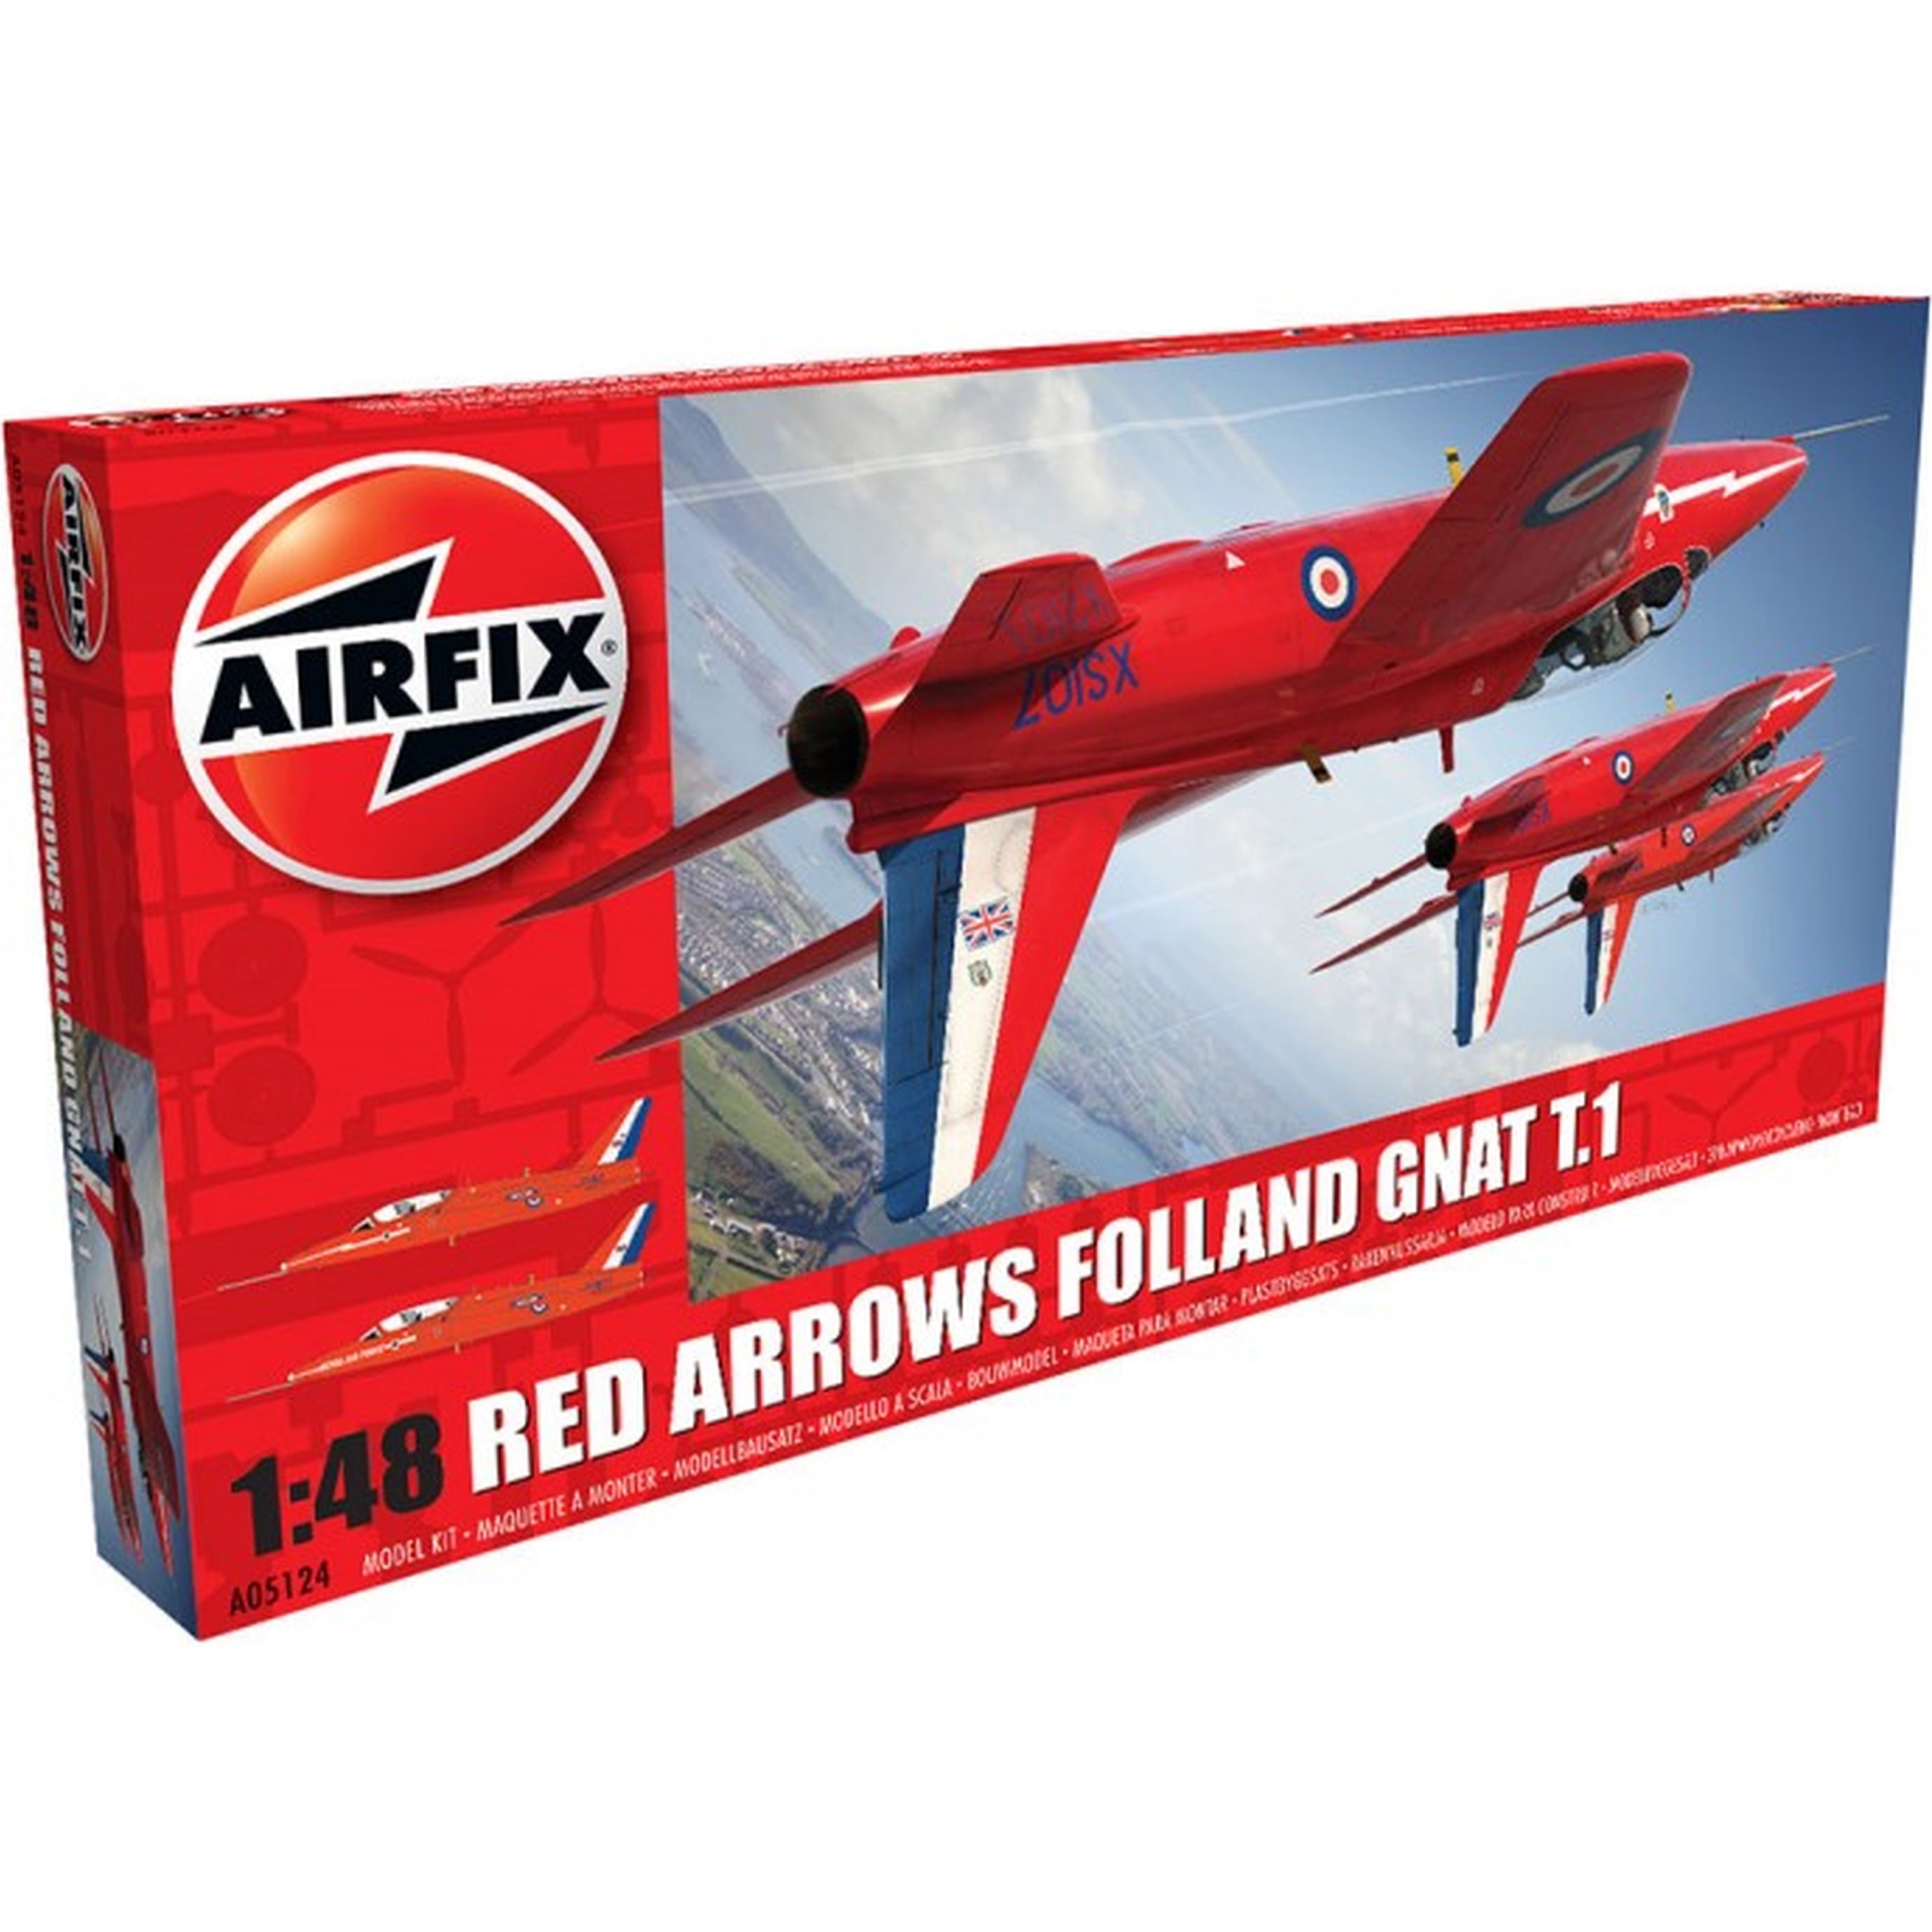 Airfix 1:48 Scale Aircraft Model Kits Choice of model kits available 